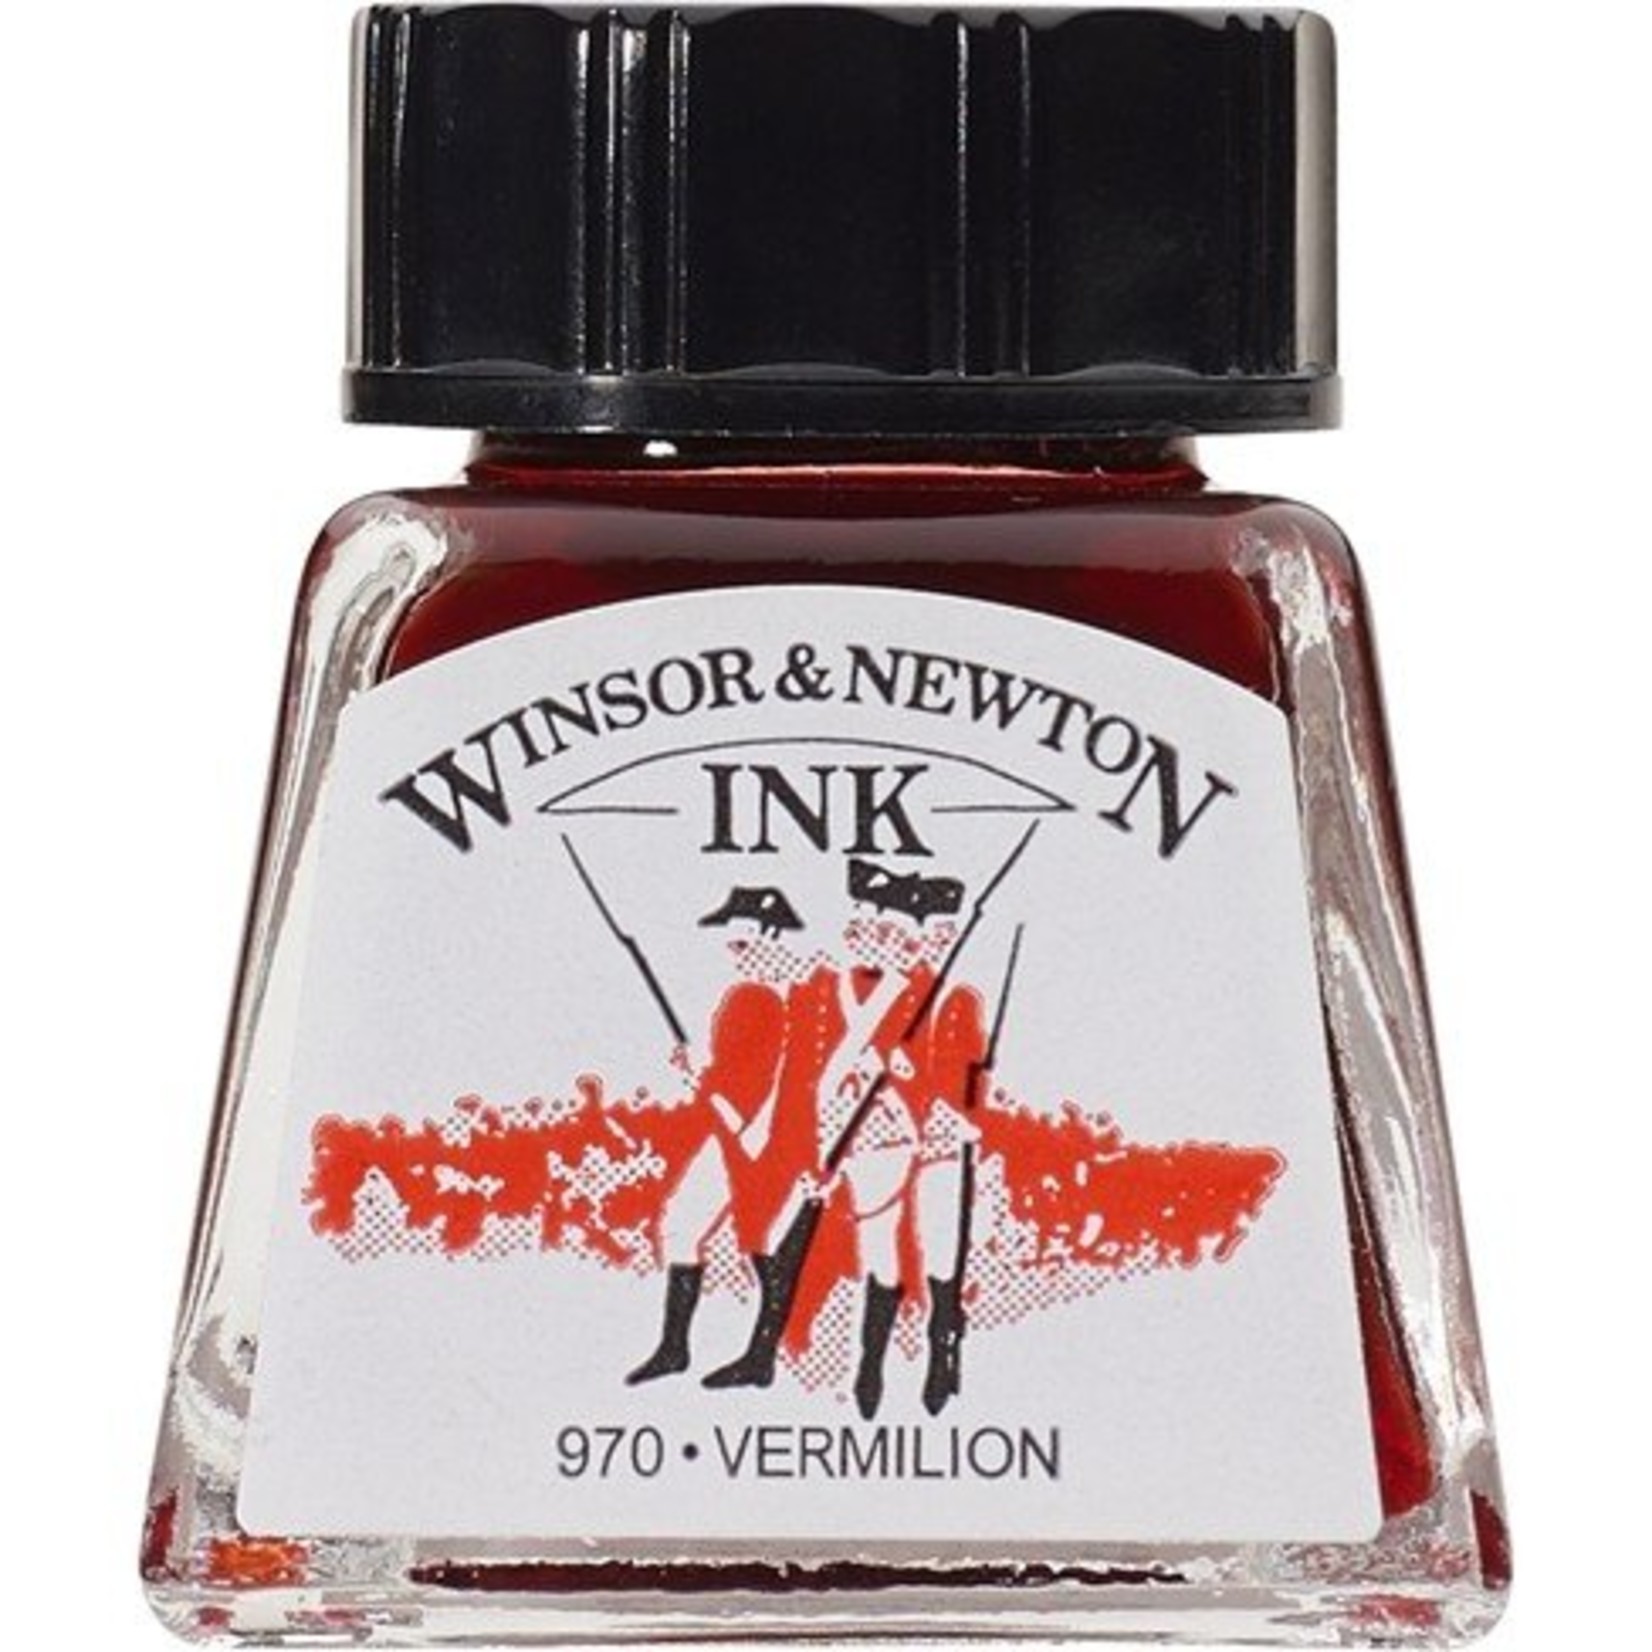 WINSOR NEWTON WINSOR & NEWTON DRAWING INK 14ML VERMILION